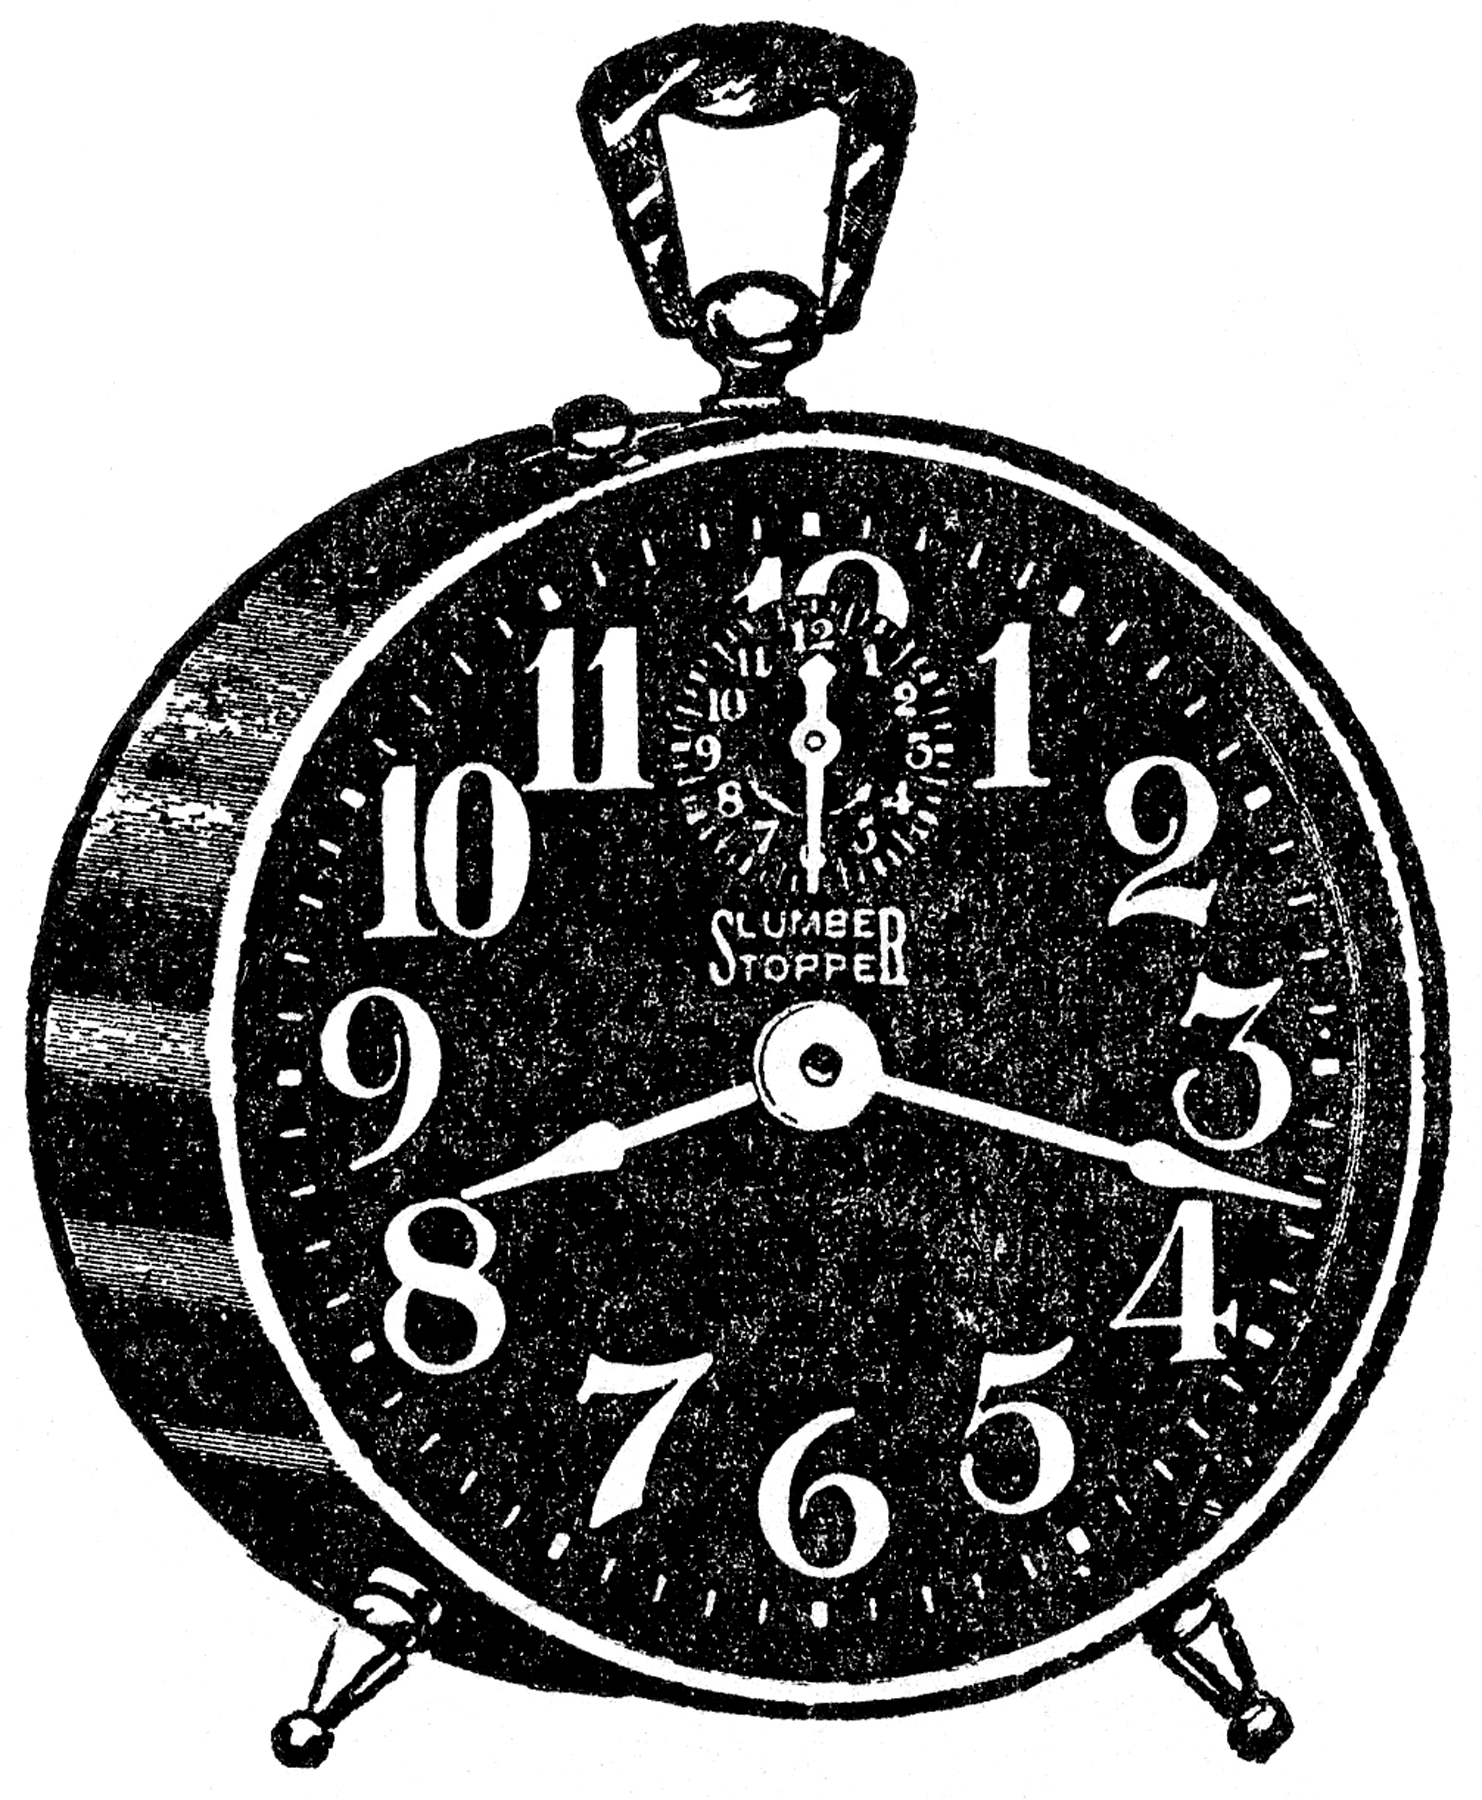 9 Clock Graphics - Vintage Alarm Clocks etc - Updated! - The Graphics Fairy